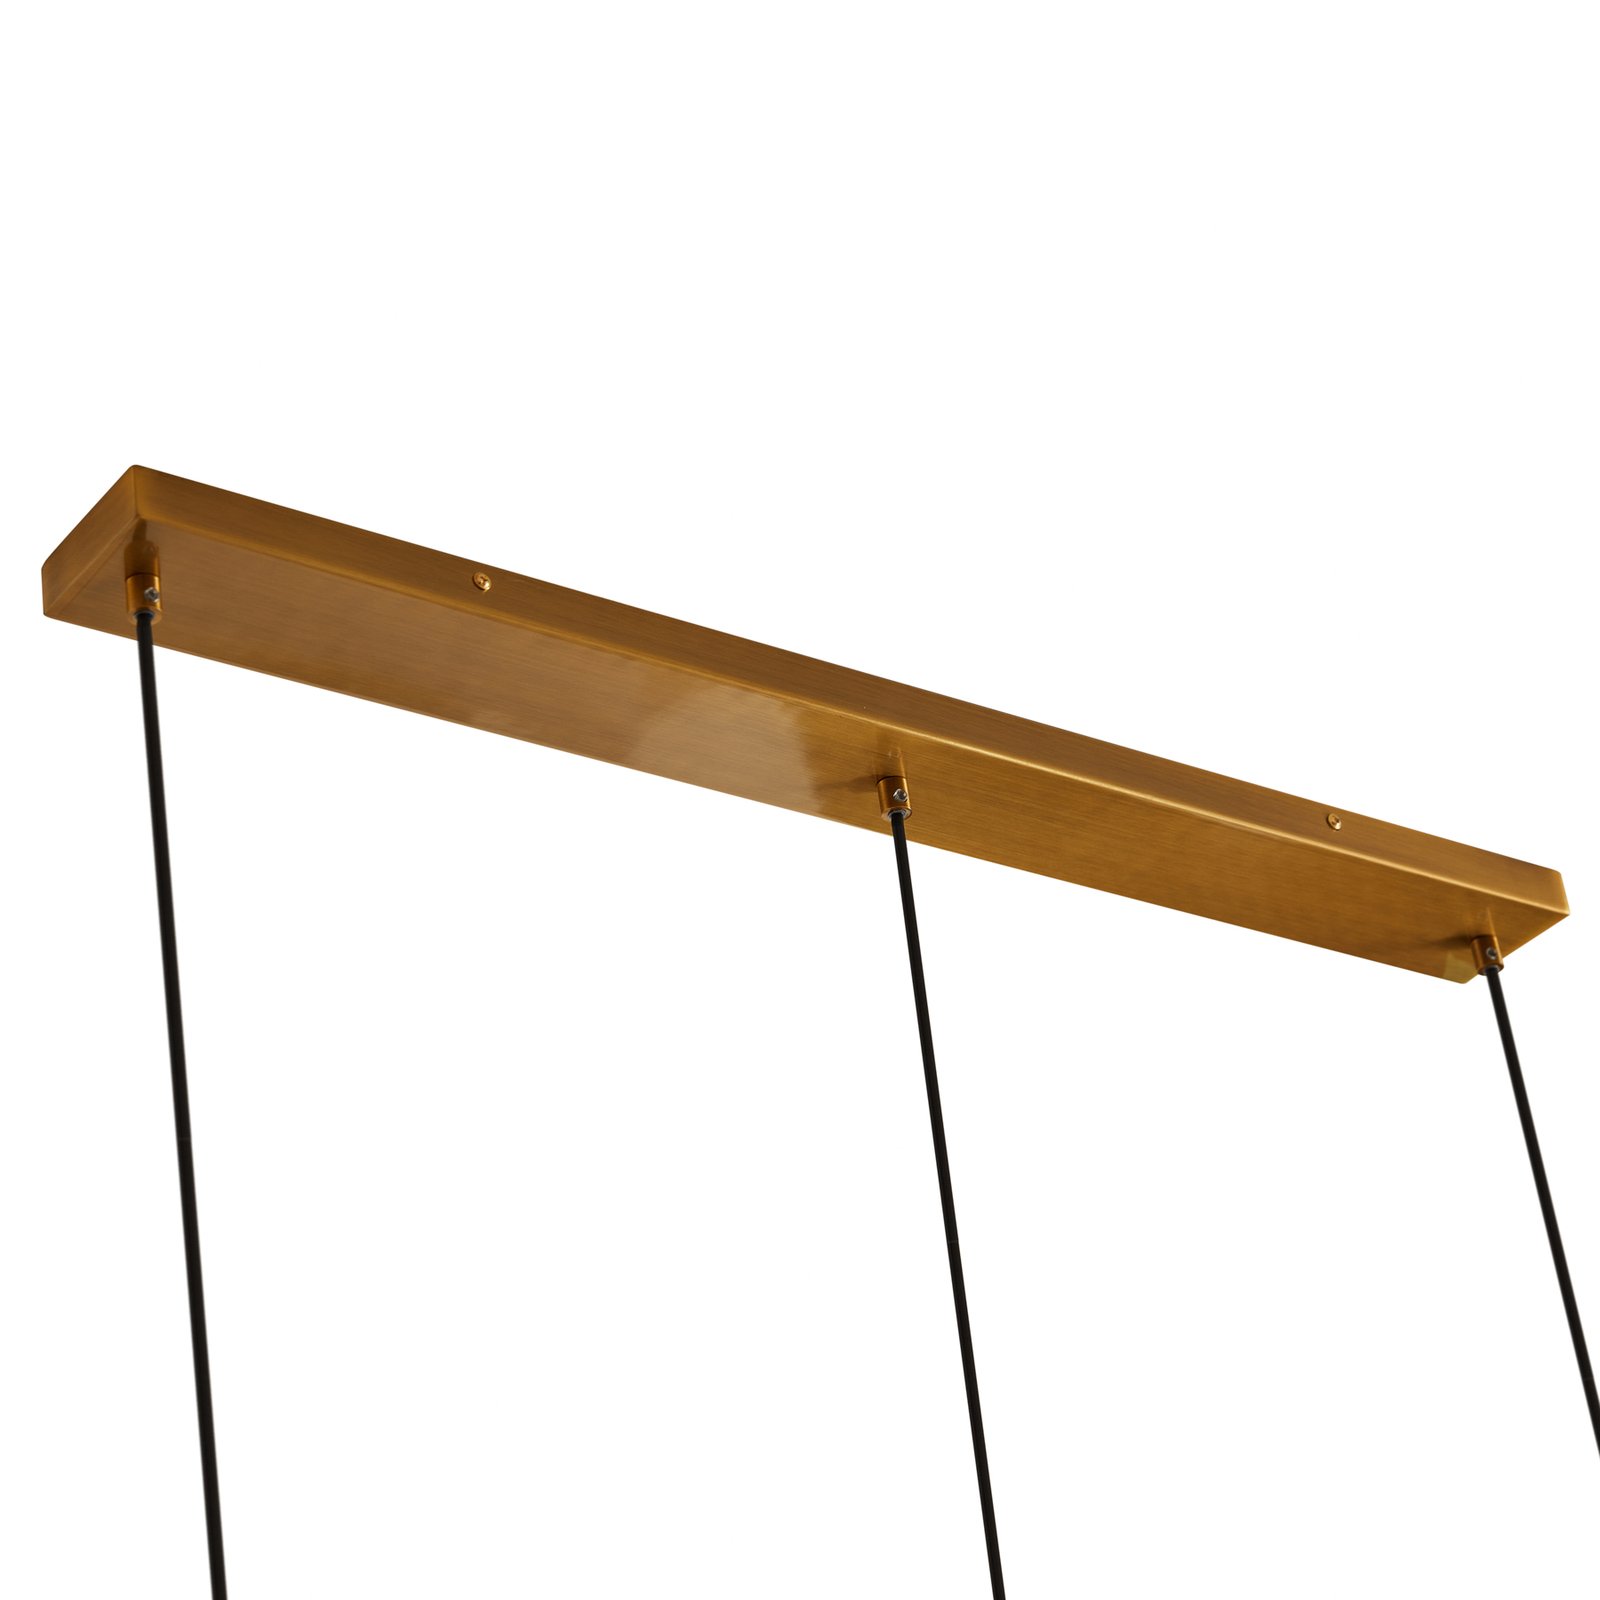 Lindby suspension Drakar, 3 lampes, ambre, verre, Ø 22 cm